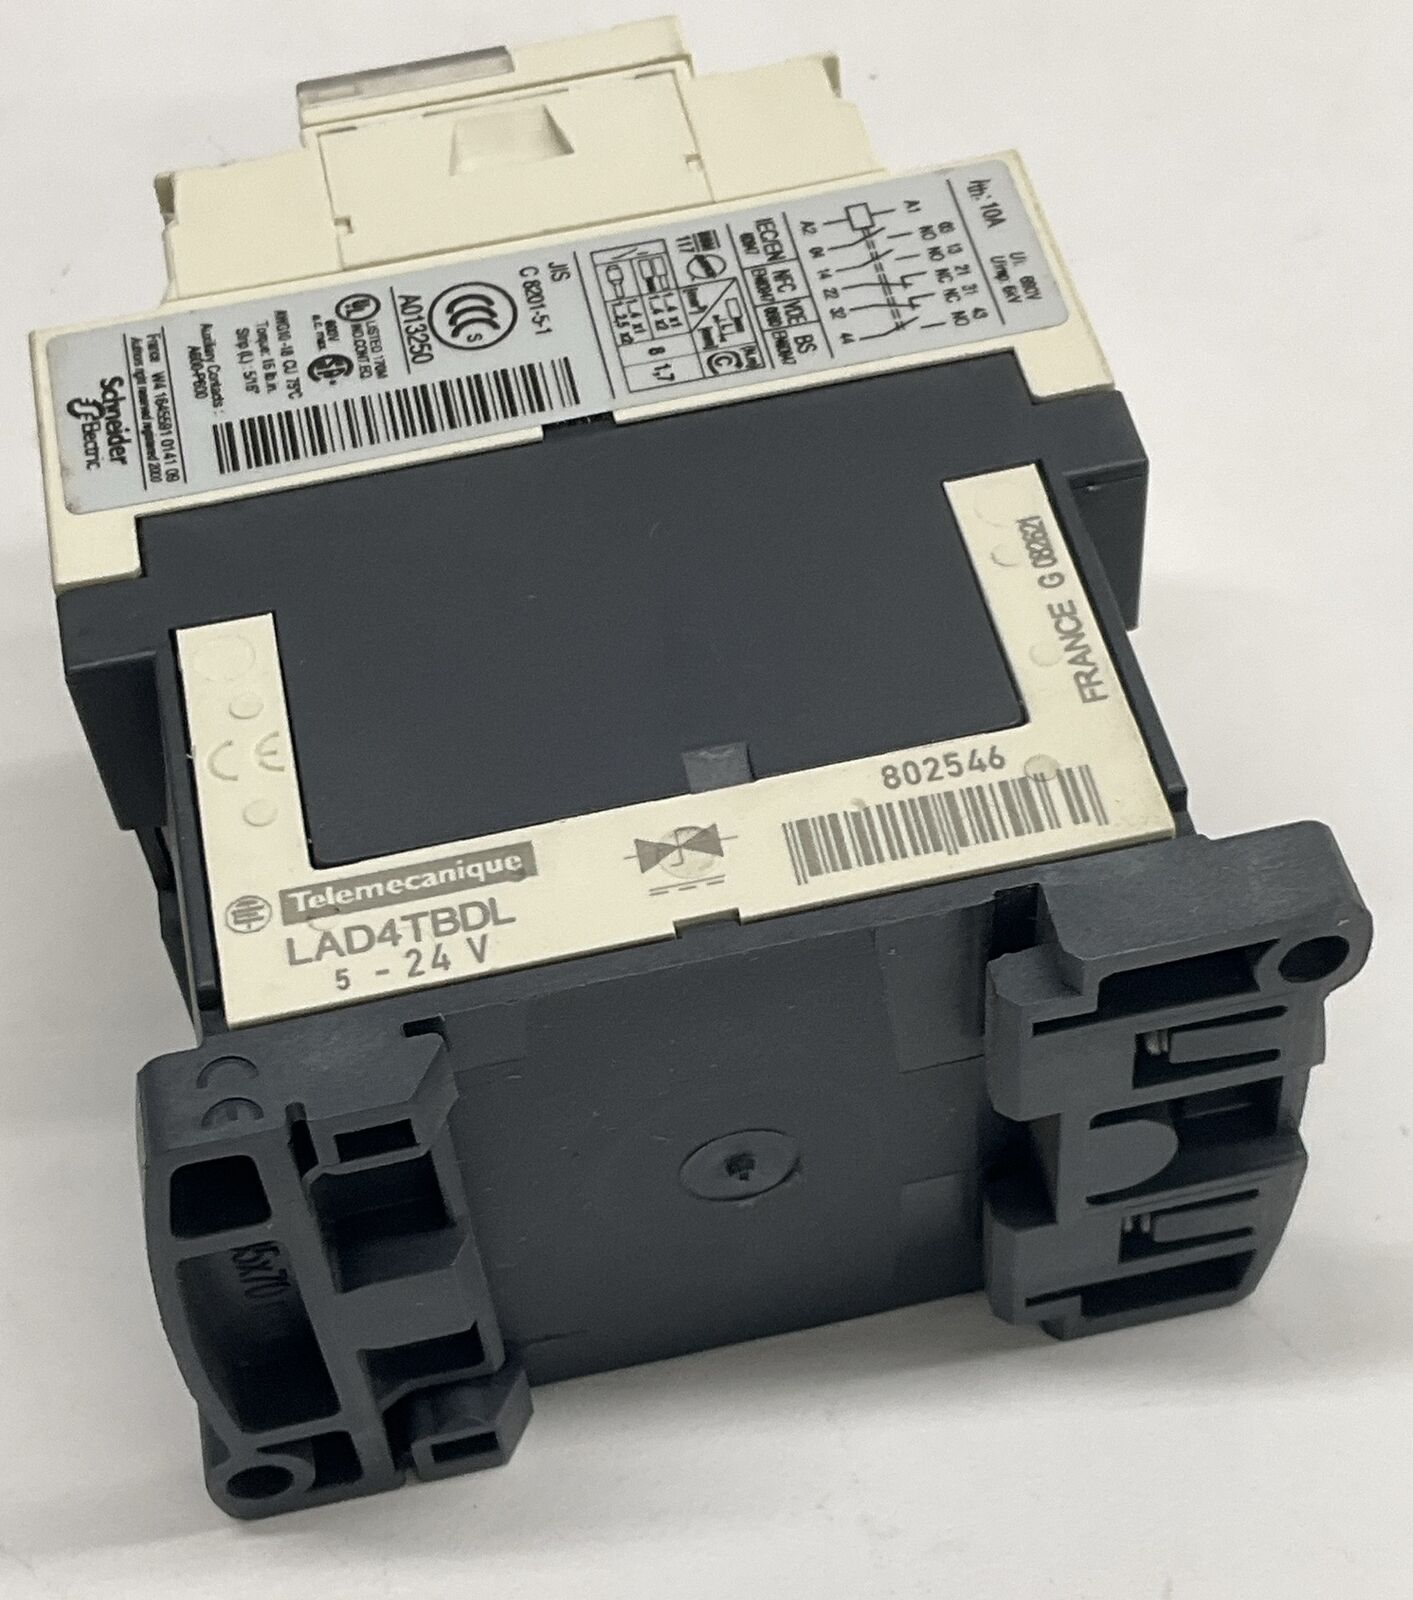 Schneider Electric Telemecanique CAD32BD 24VDC Control Relay (RE251)